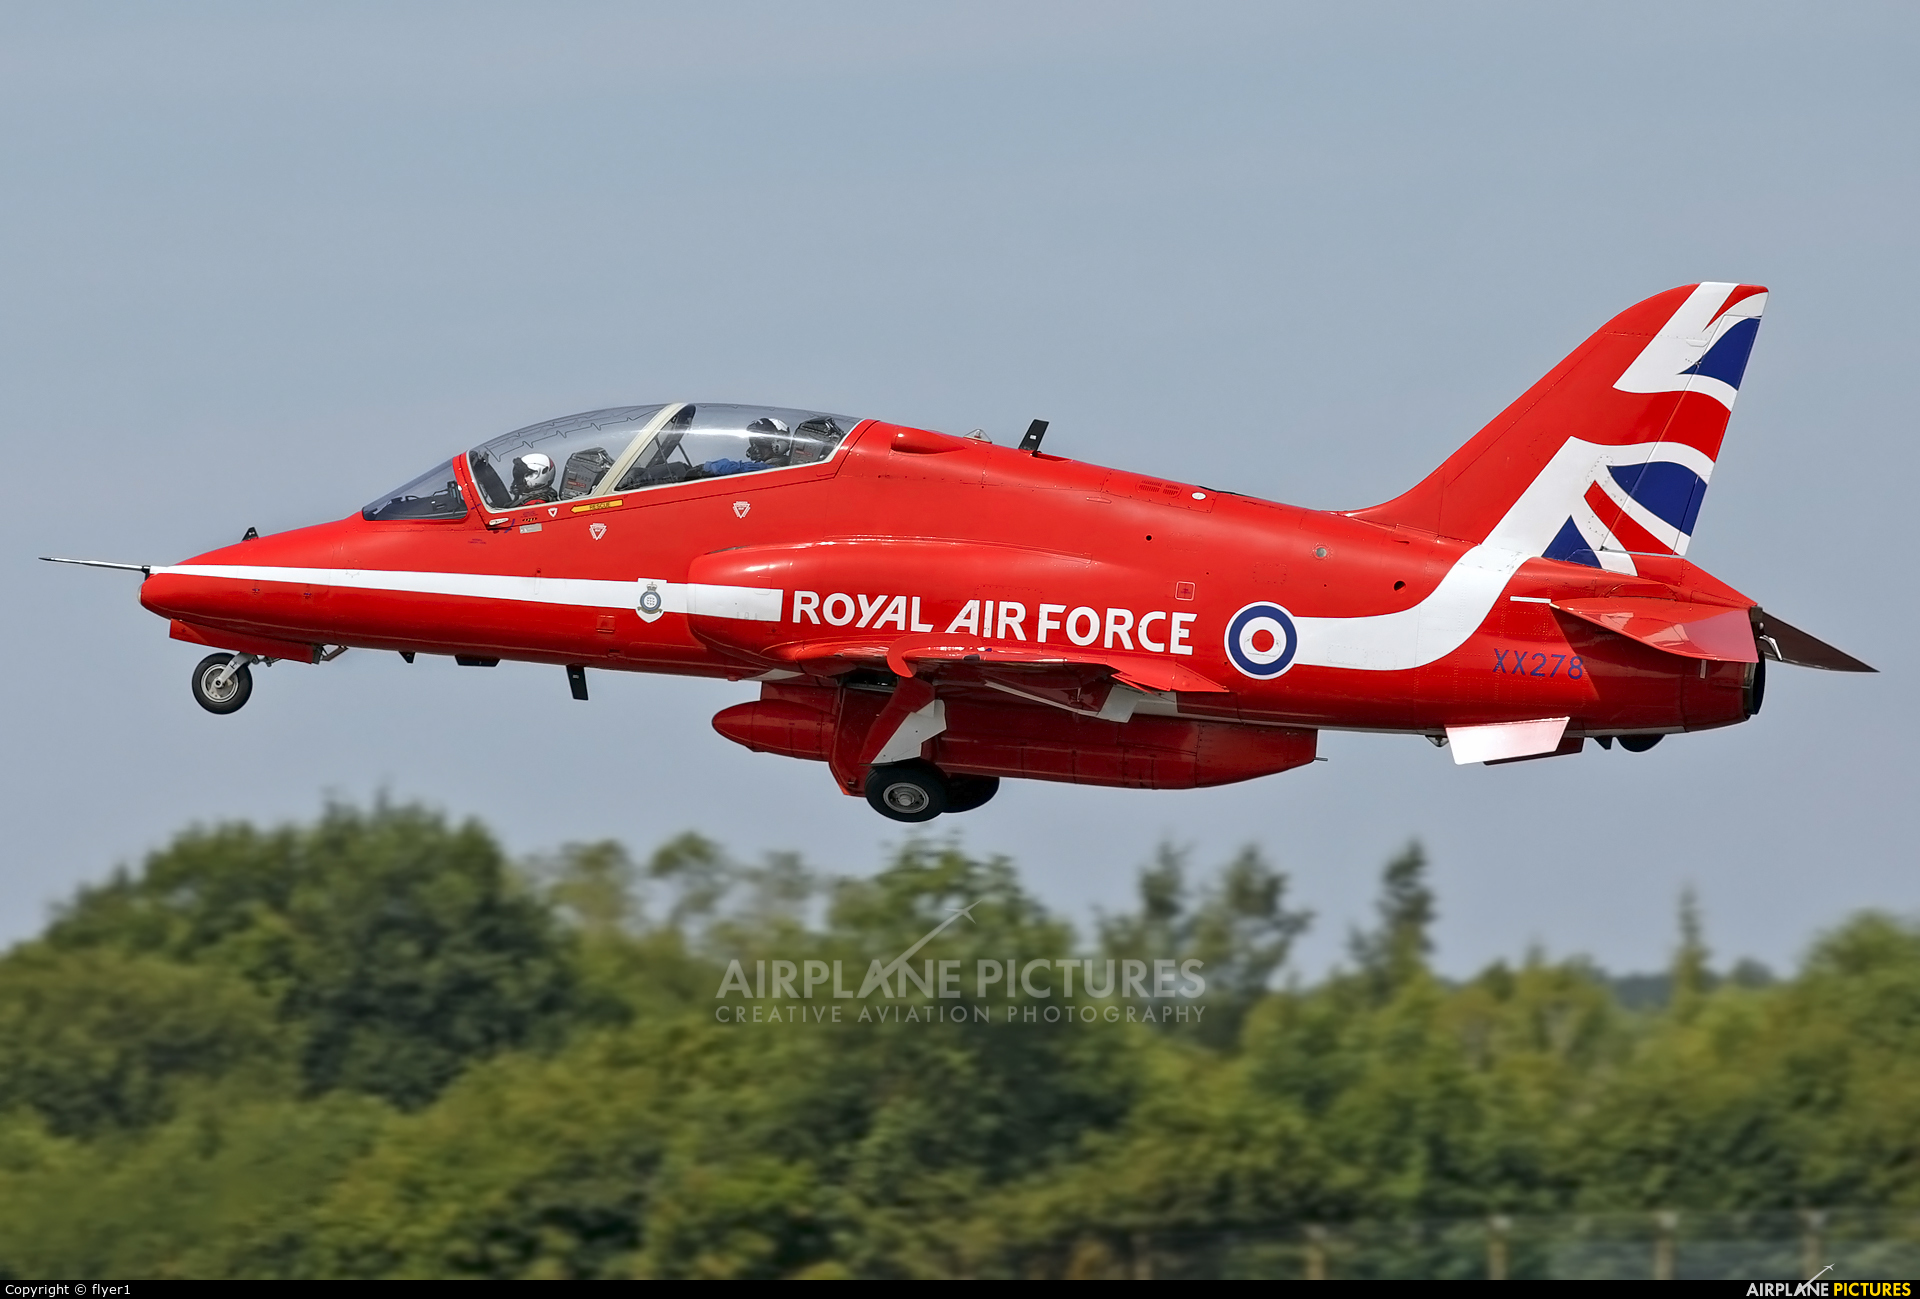 Royal Air Force "Red Arrows" XX278 aircraft at Fairford